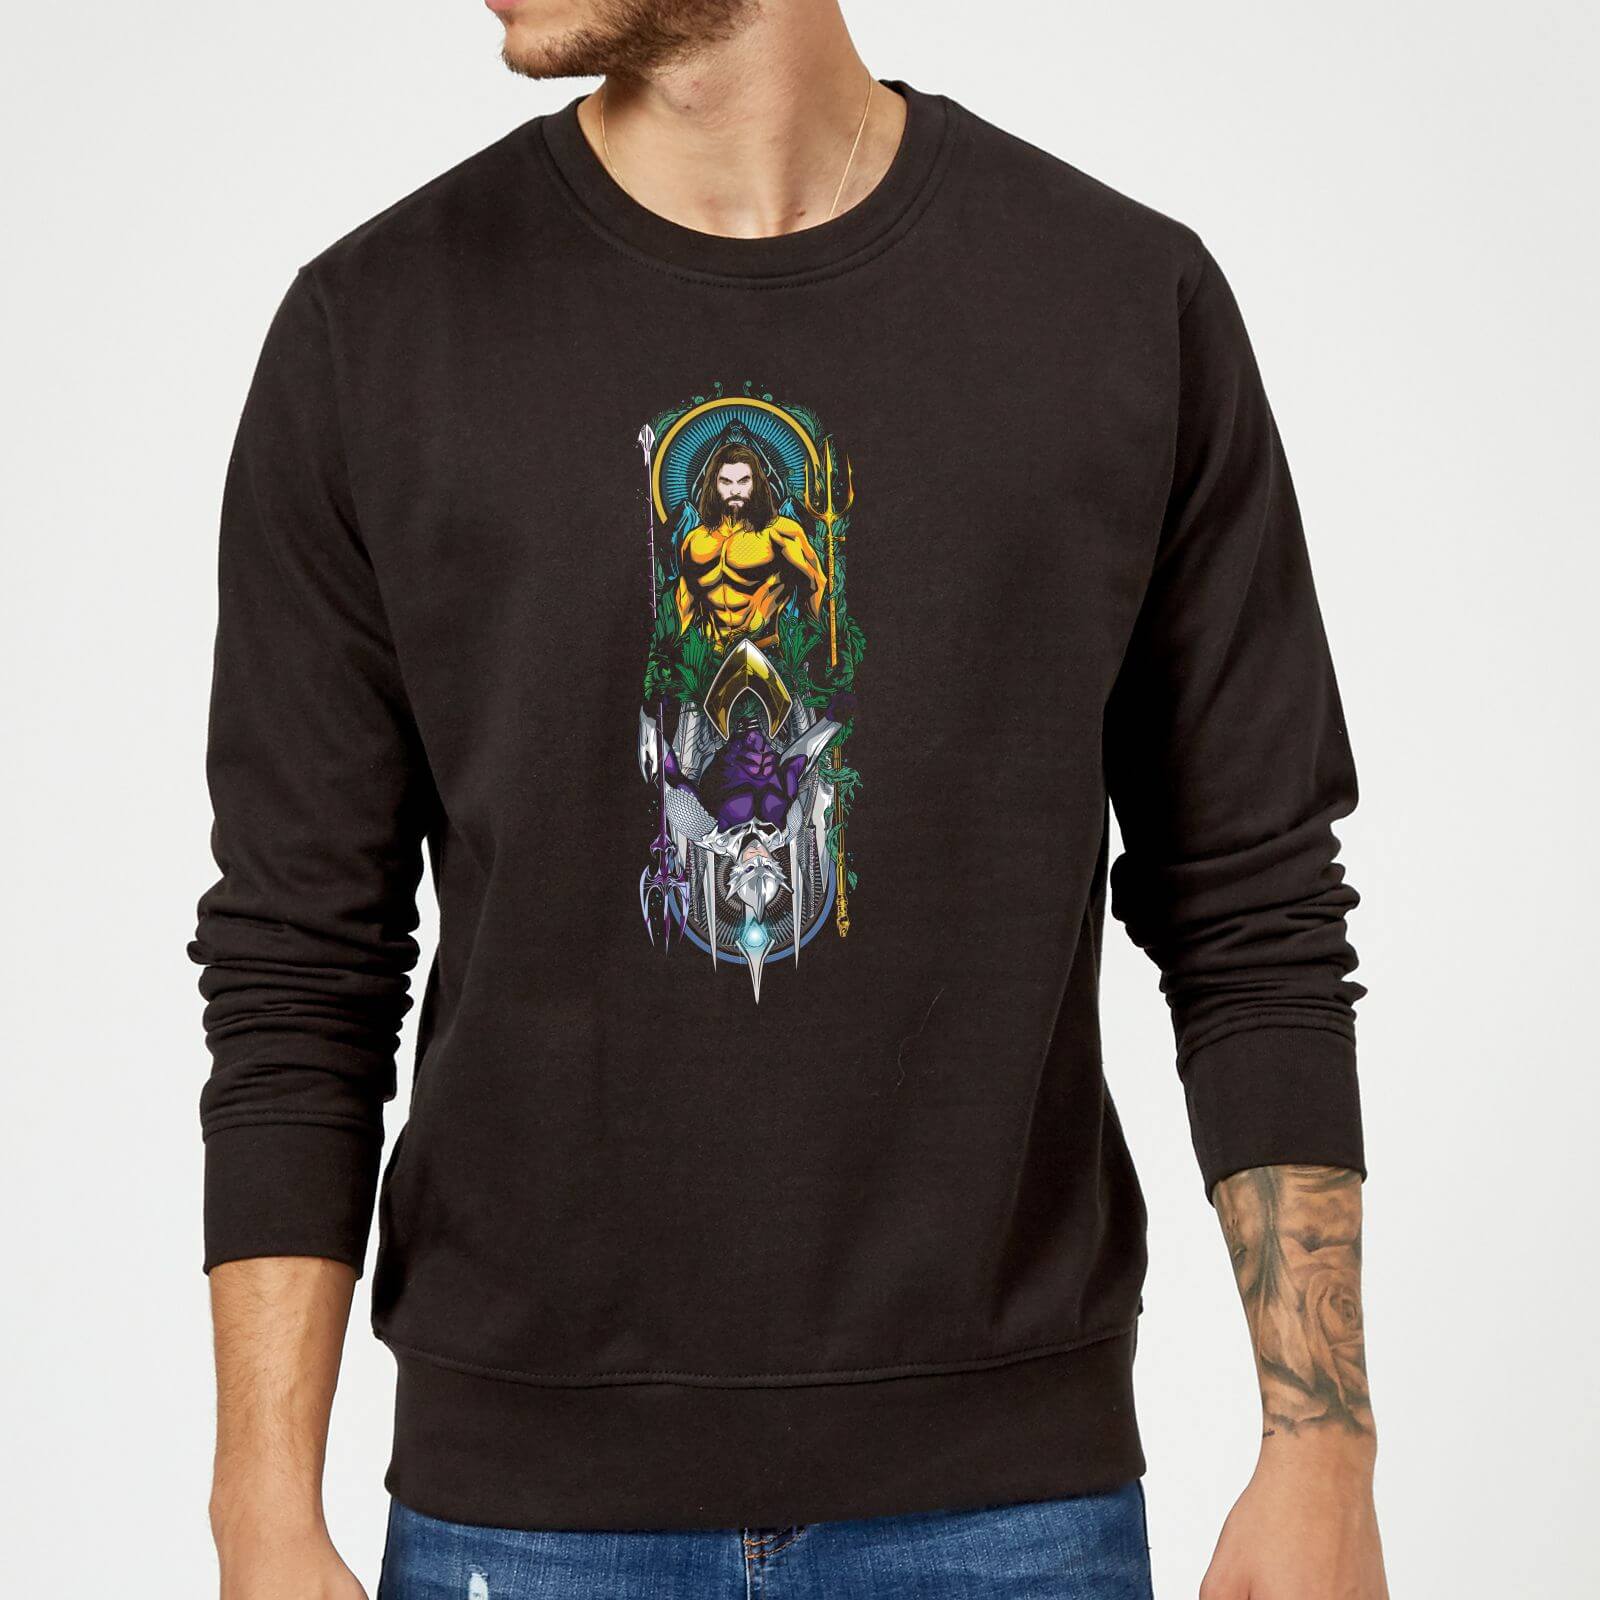 aquaman and ocean master sweatshirt - black - xxl - nero